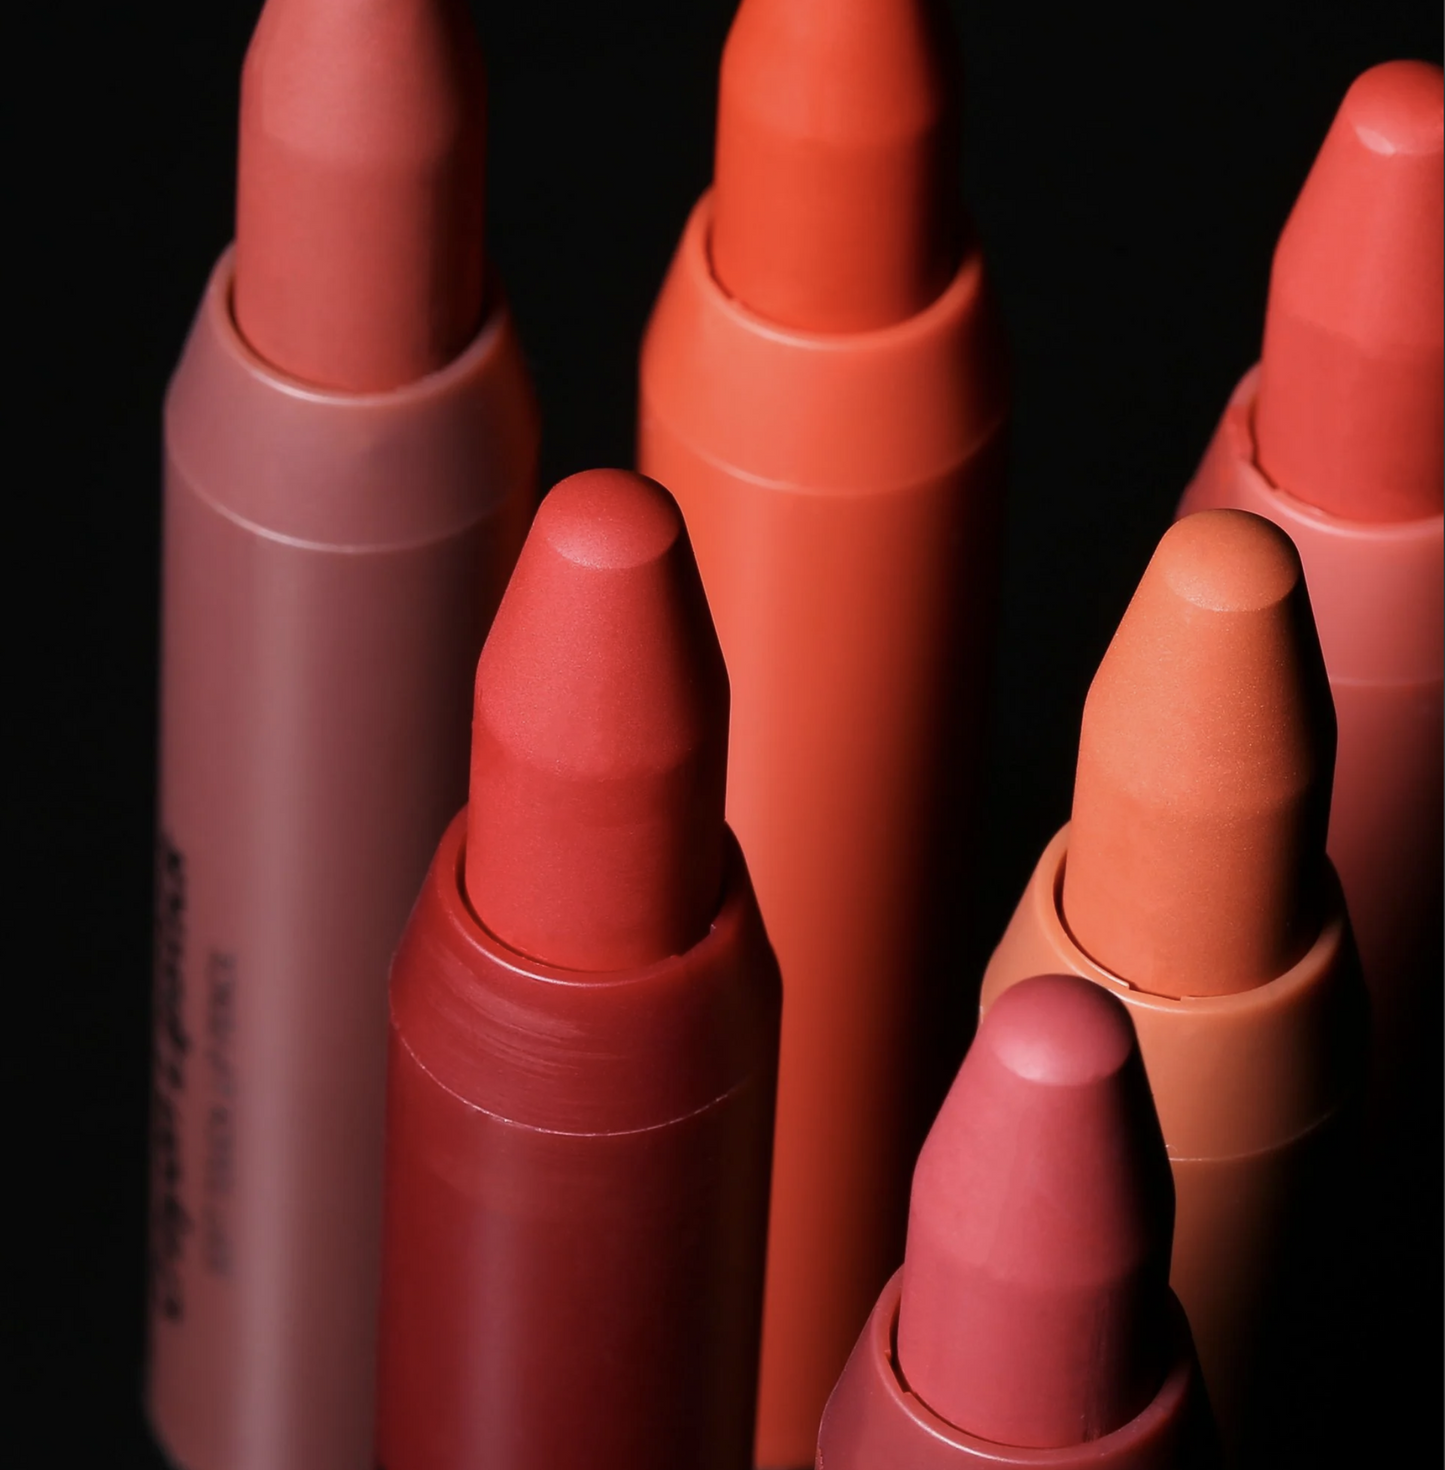 Crayon Lipstick Red #4